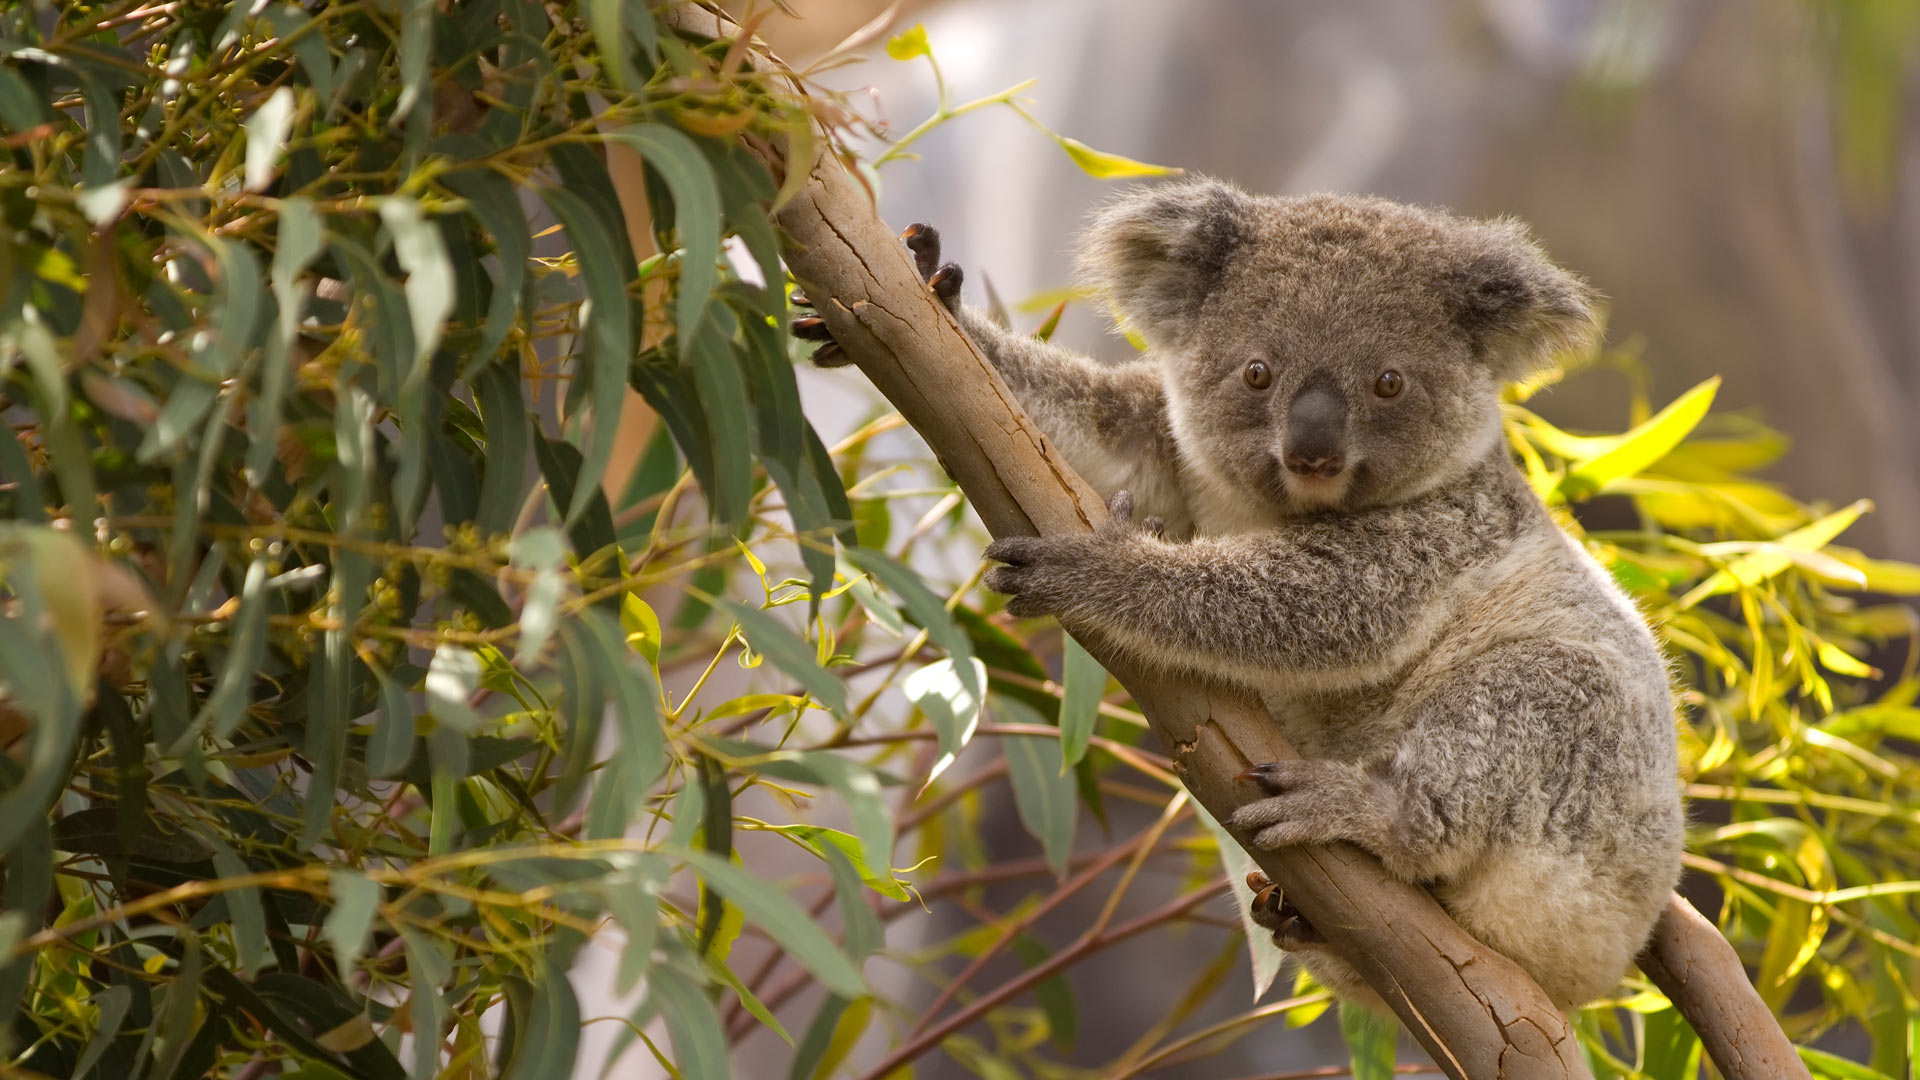 Perched Koala